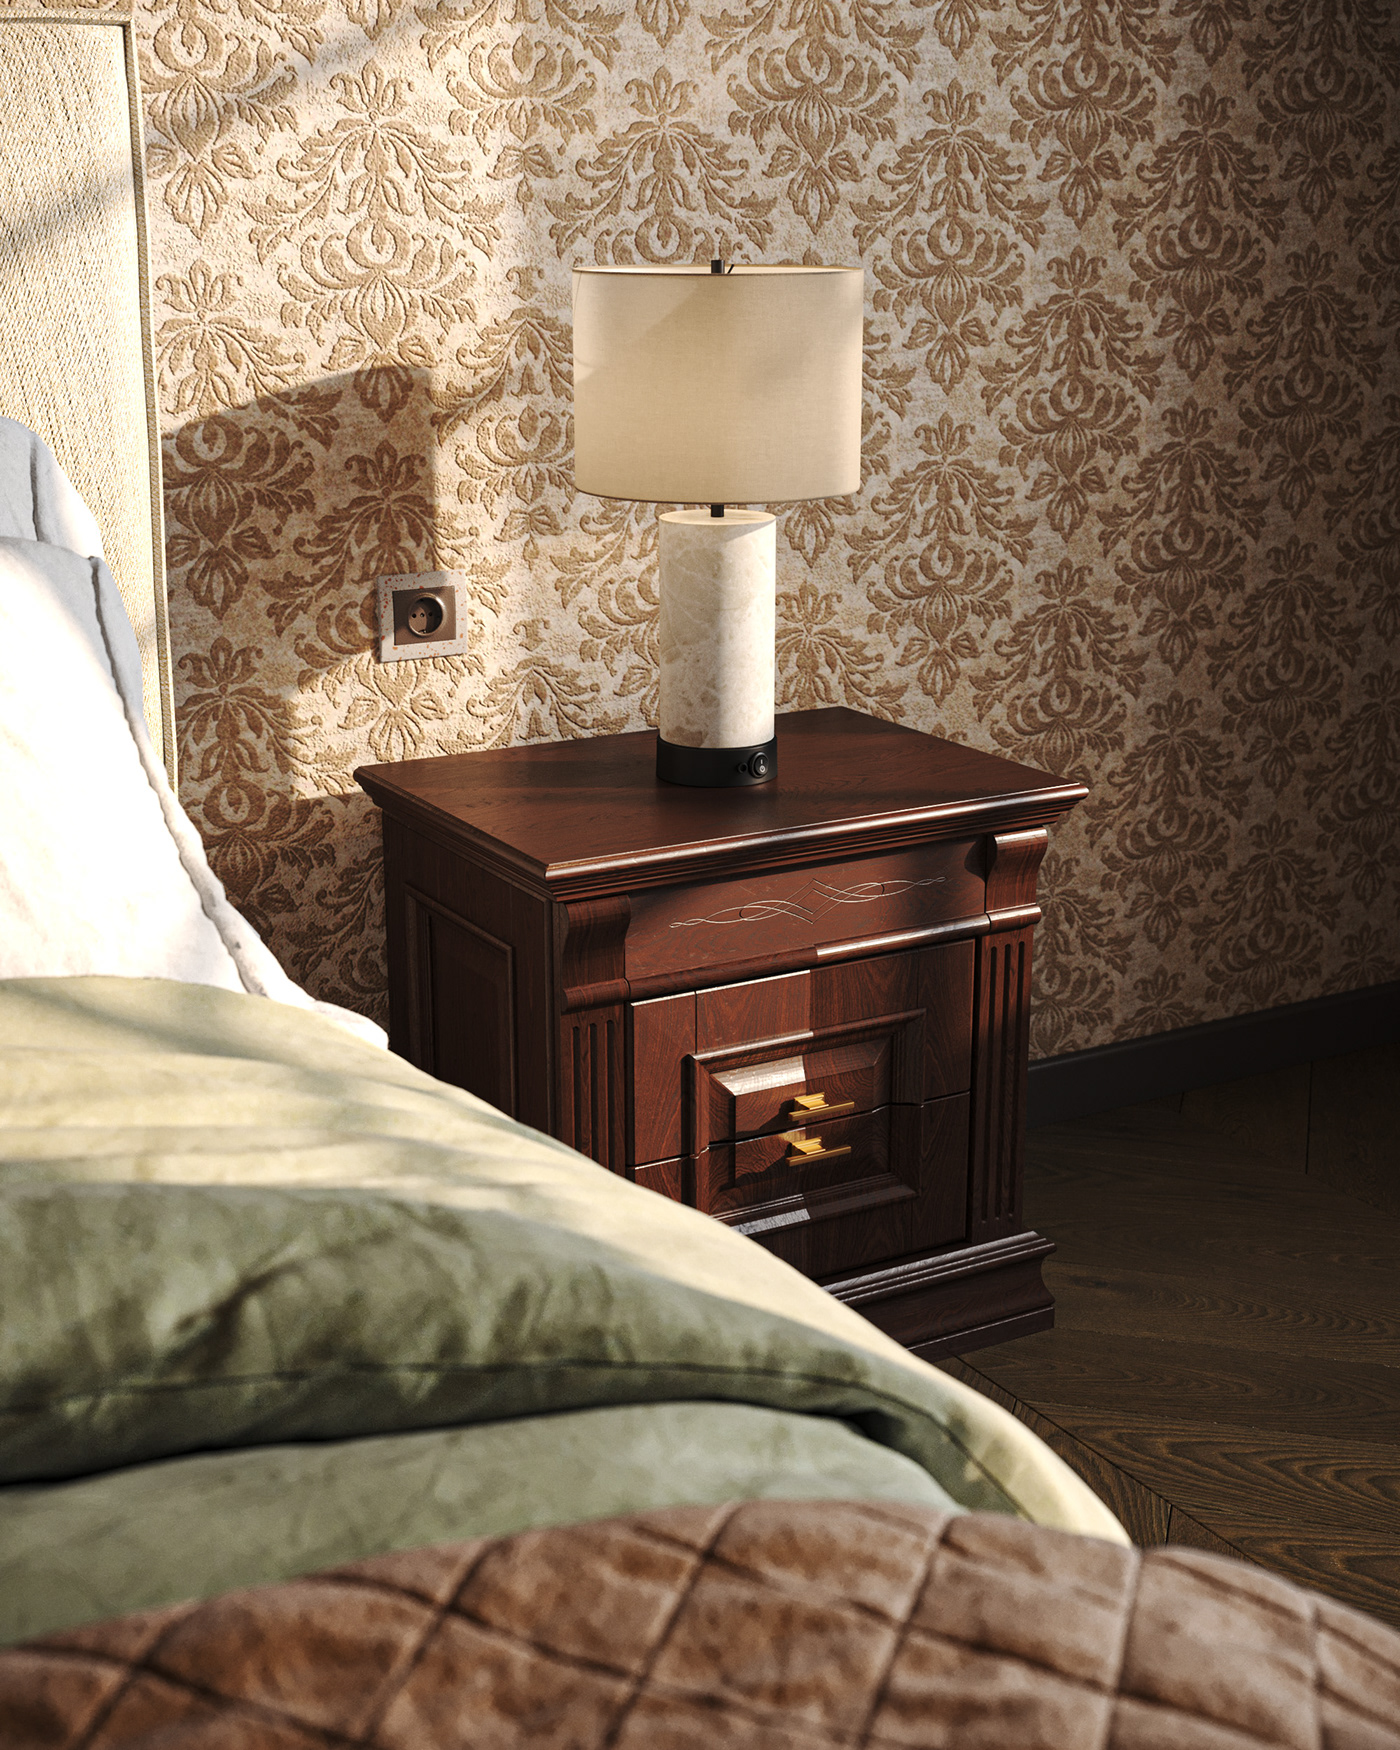 3ds max architecture bed bedroom bedroom design corona Interior interior design  Render visualization